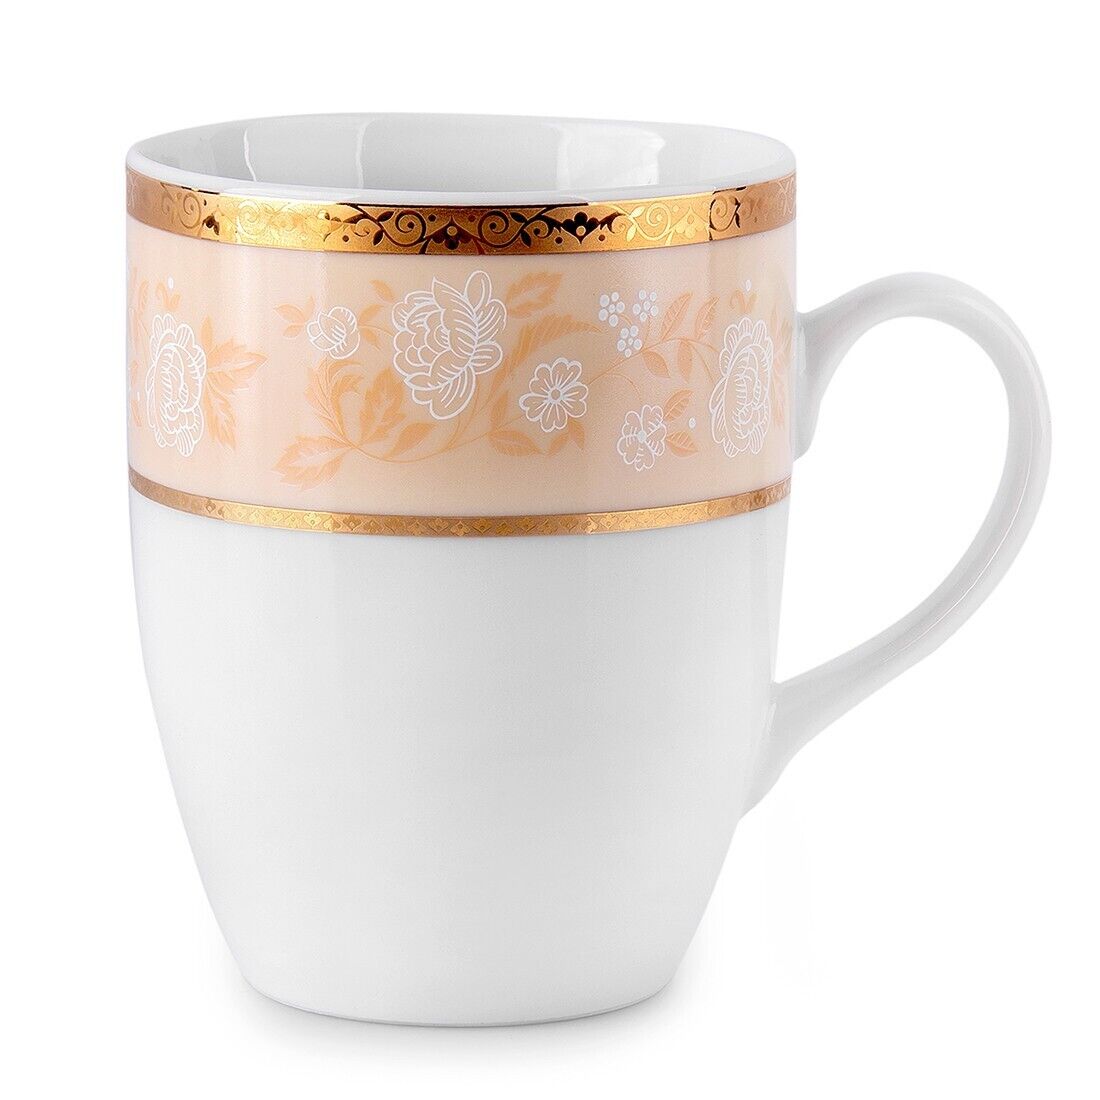 Gold Roses Porcelain Mug Coffee Mug European Porcelain Jumbo Mug, 12.5 fl oz